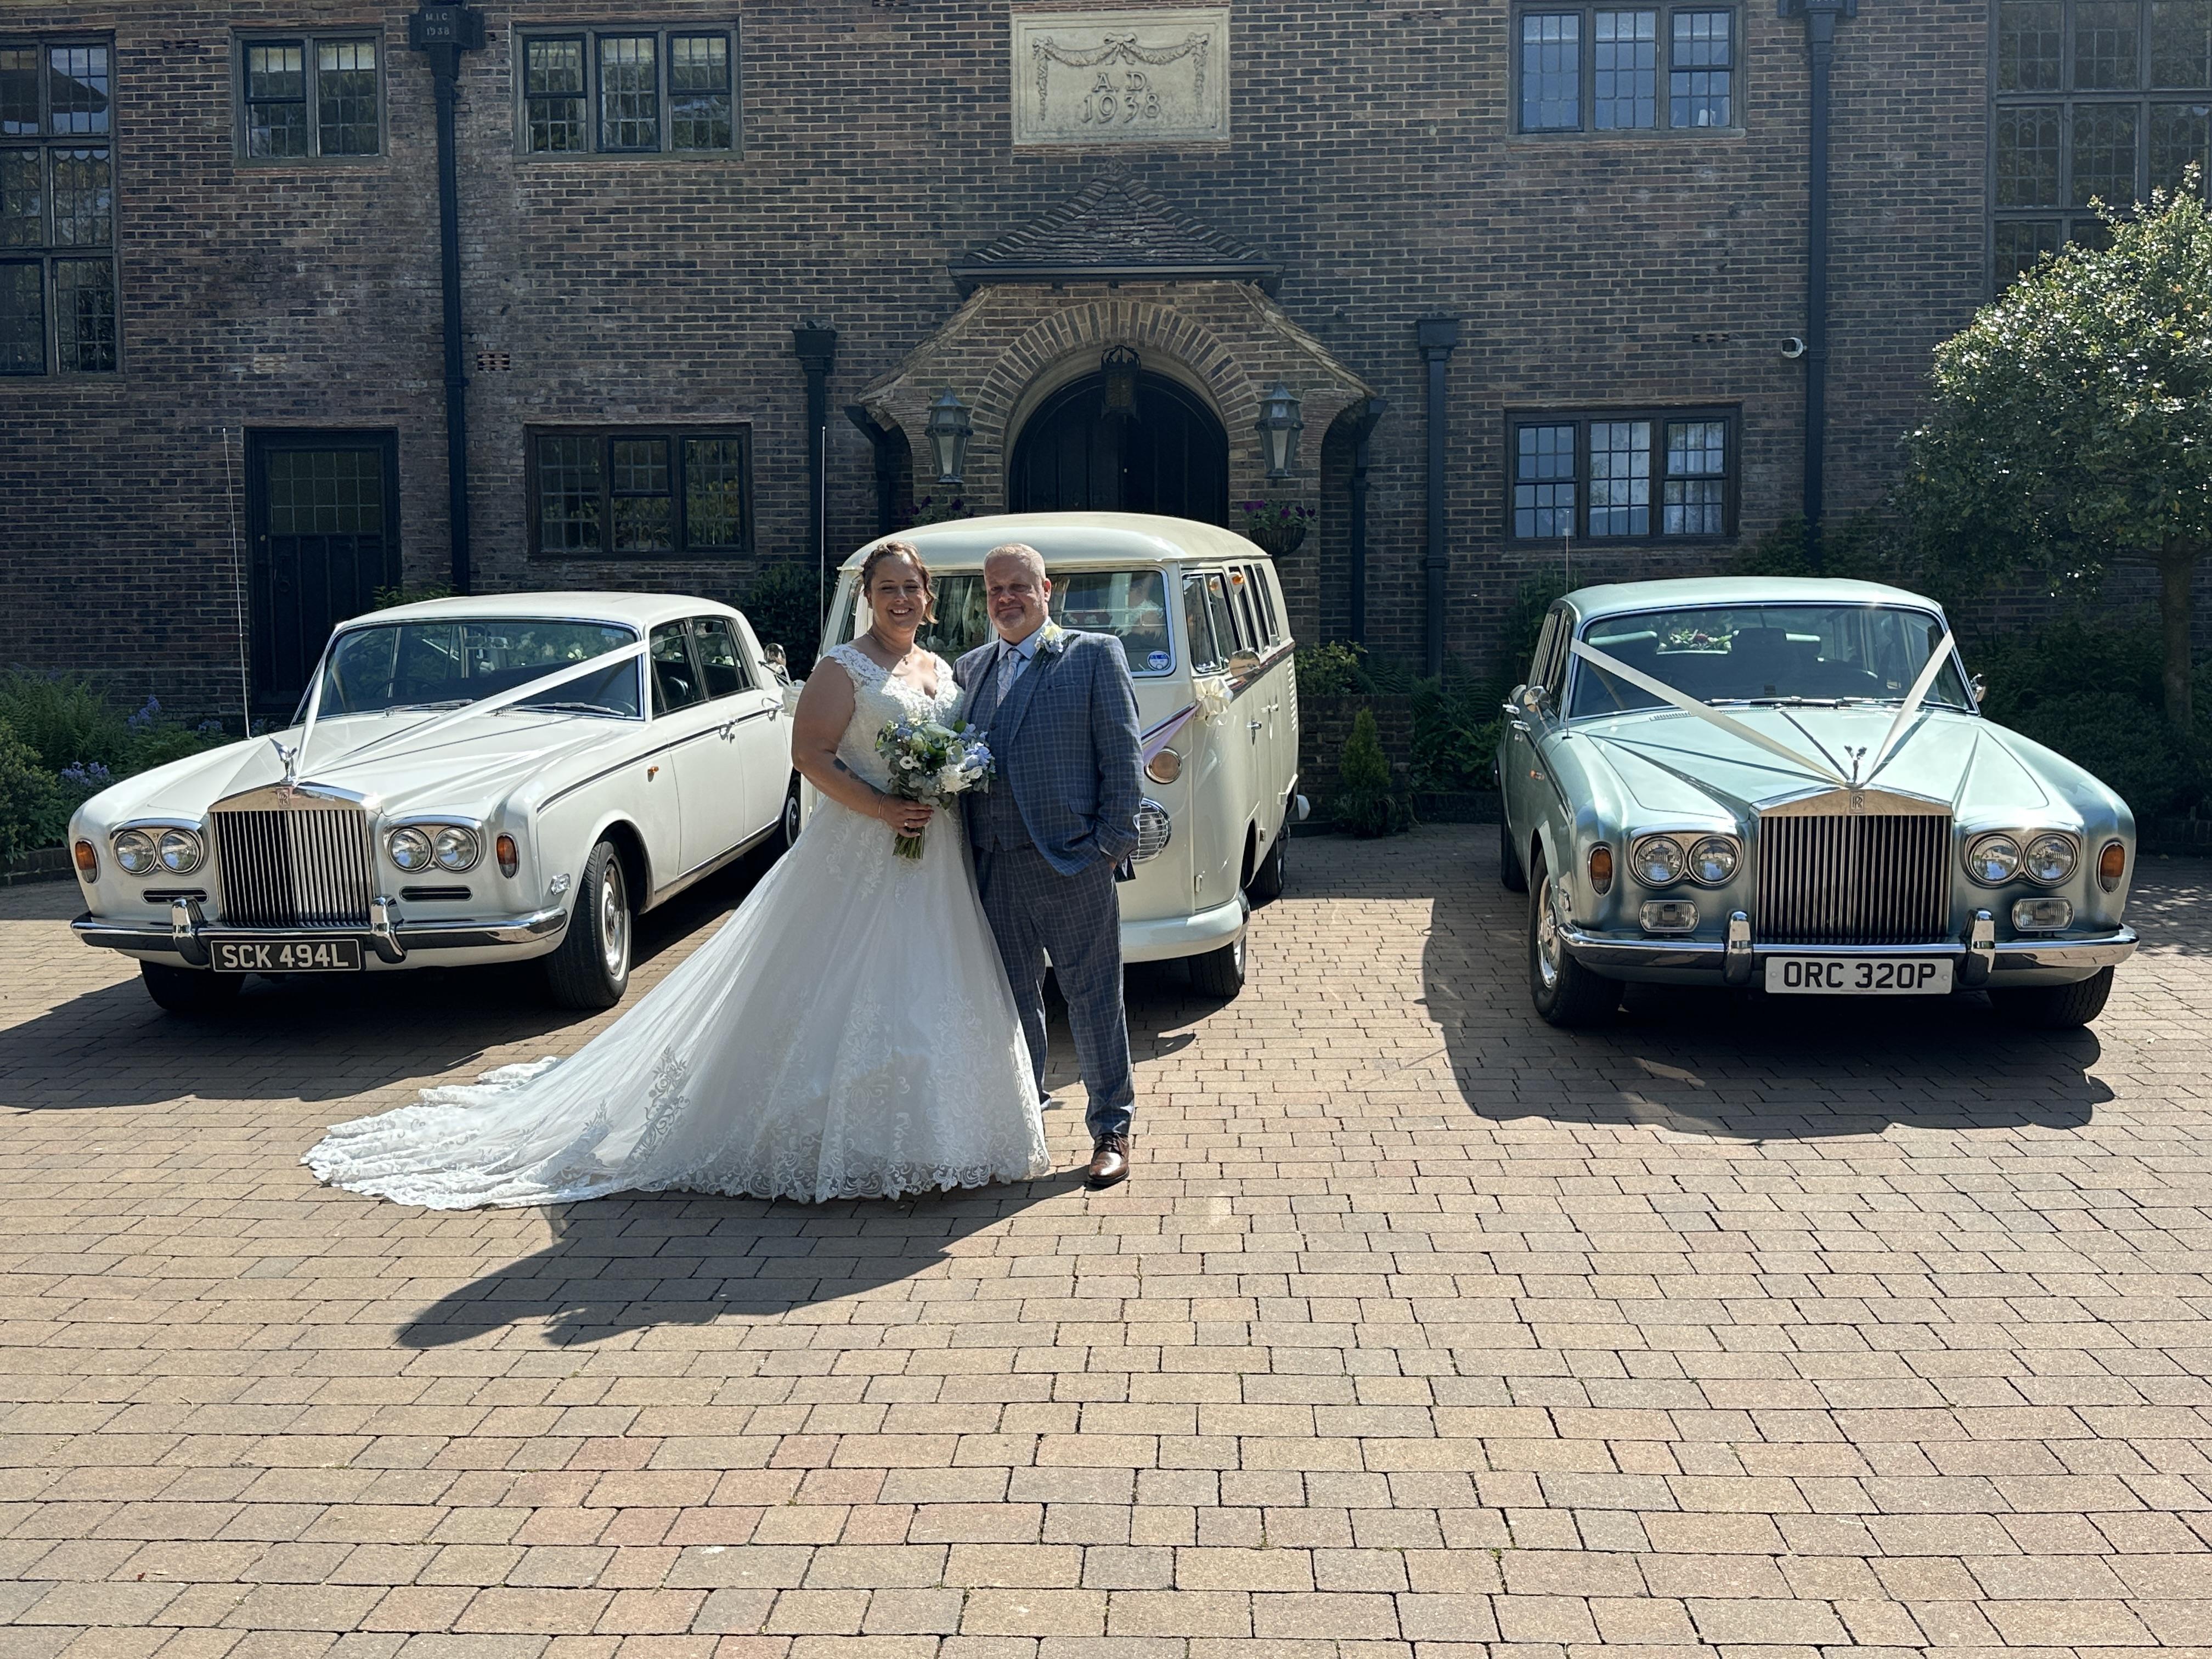 Vintage RollsRoyce Phantom Wedding Car Hire West Sussex